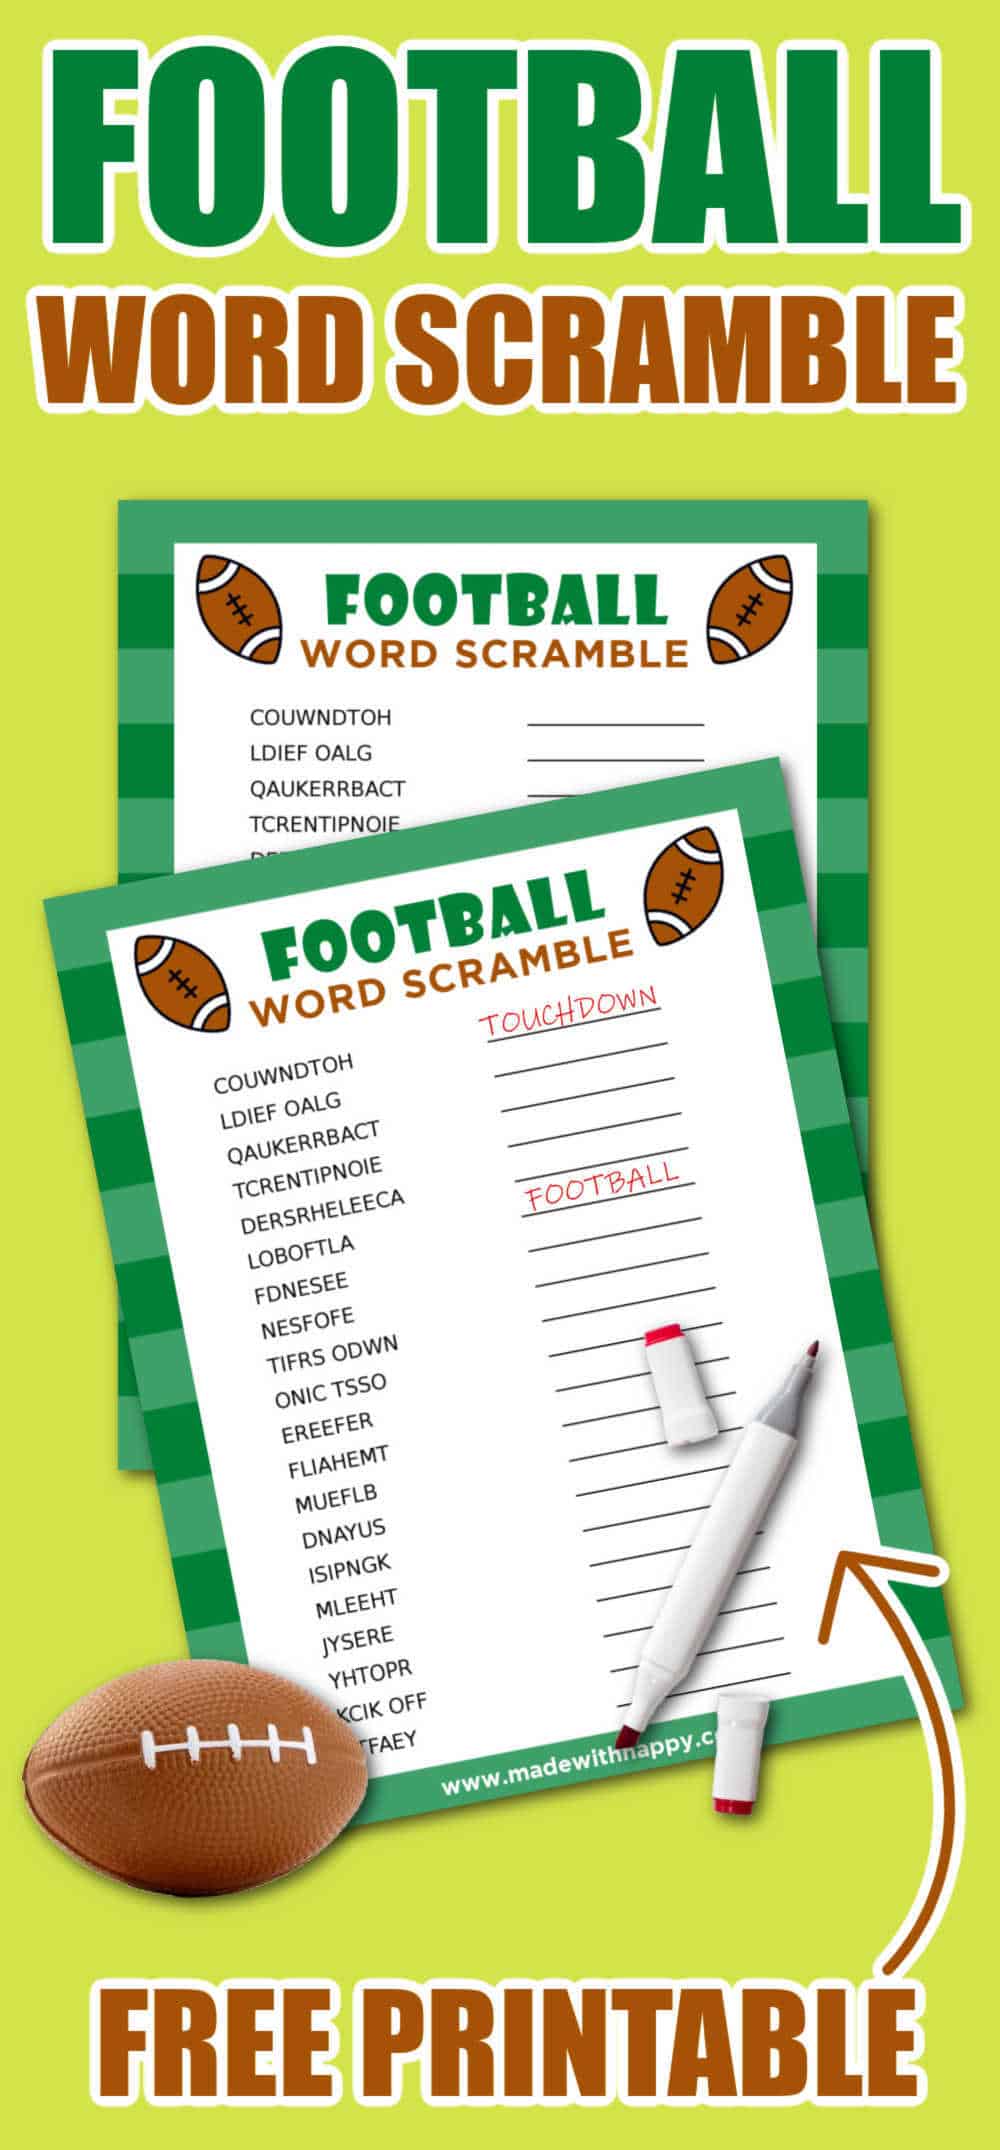 Football word scramble printable